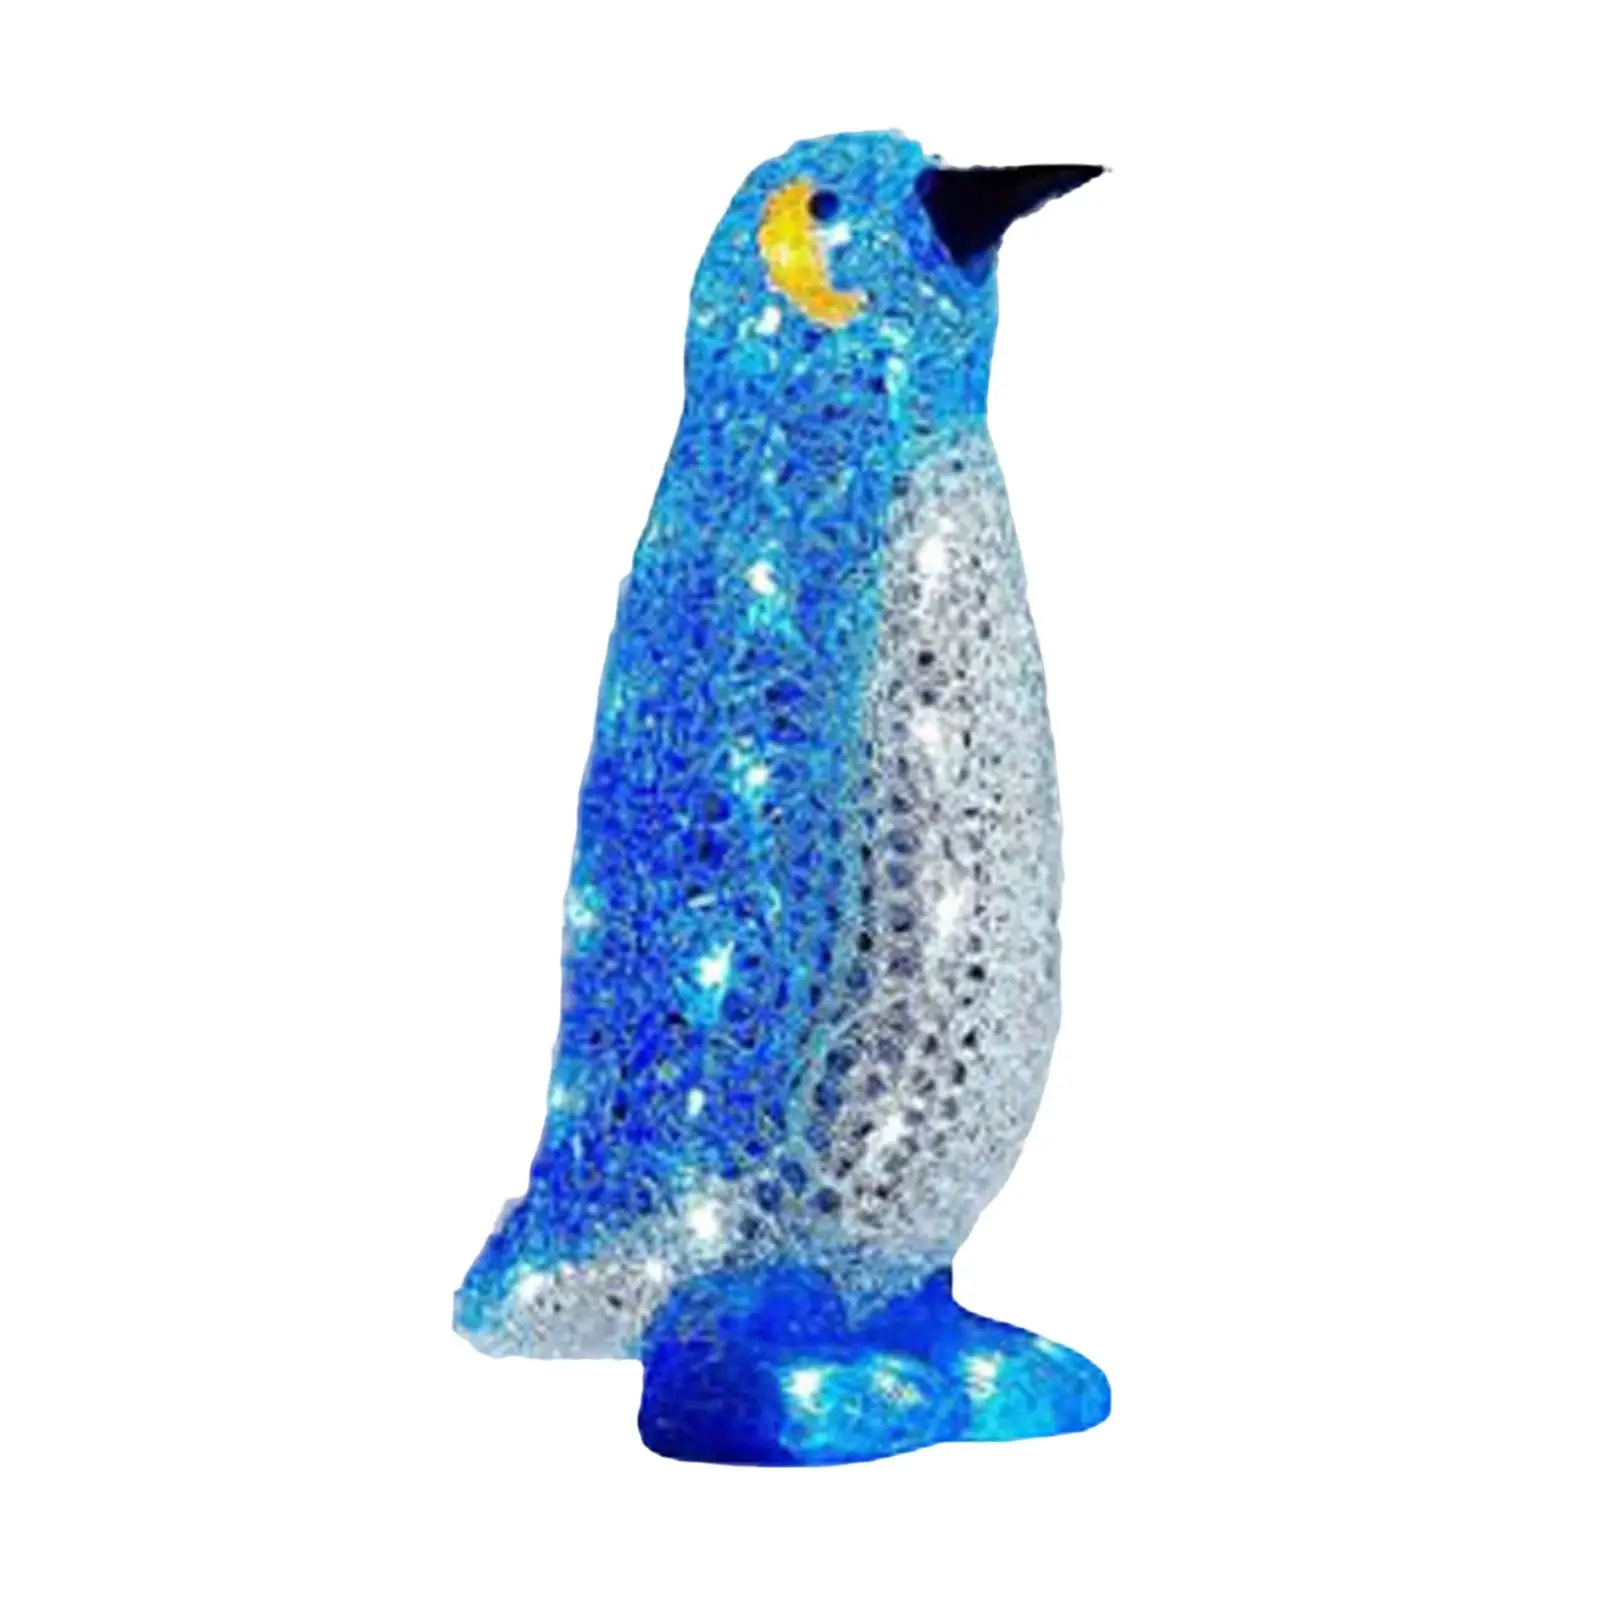 Light Up Penguin Creative Penguin Lighting Novelty Statue Lighting Figurine LED Penguin for Yard Patio Lawn Decor Ornament